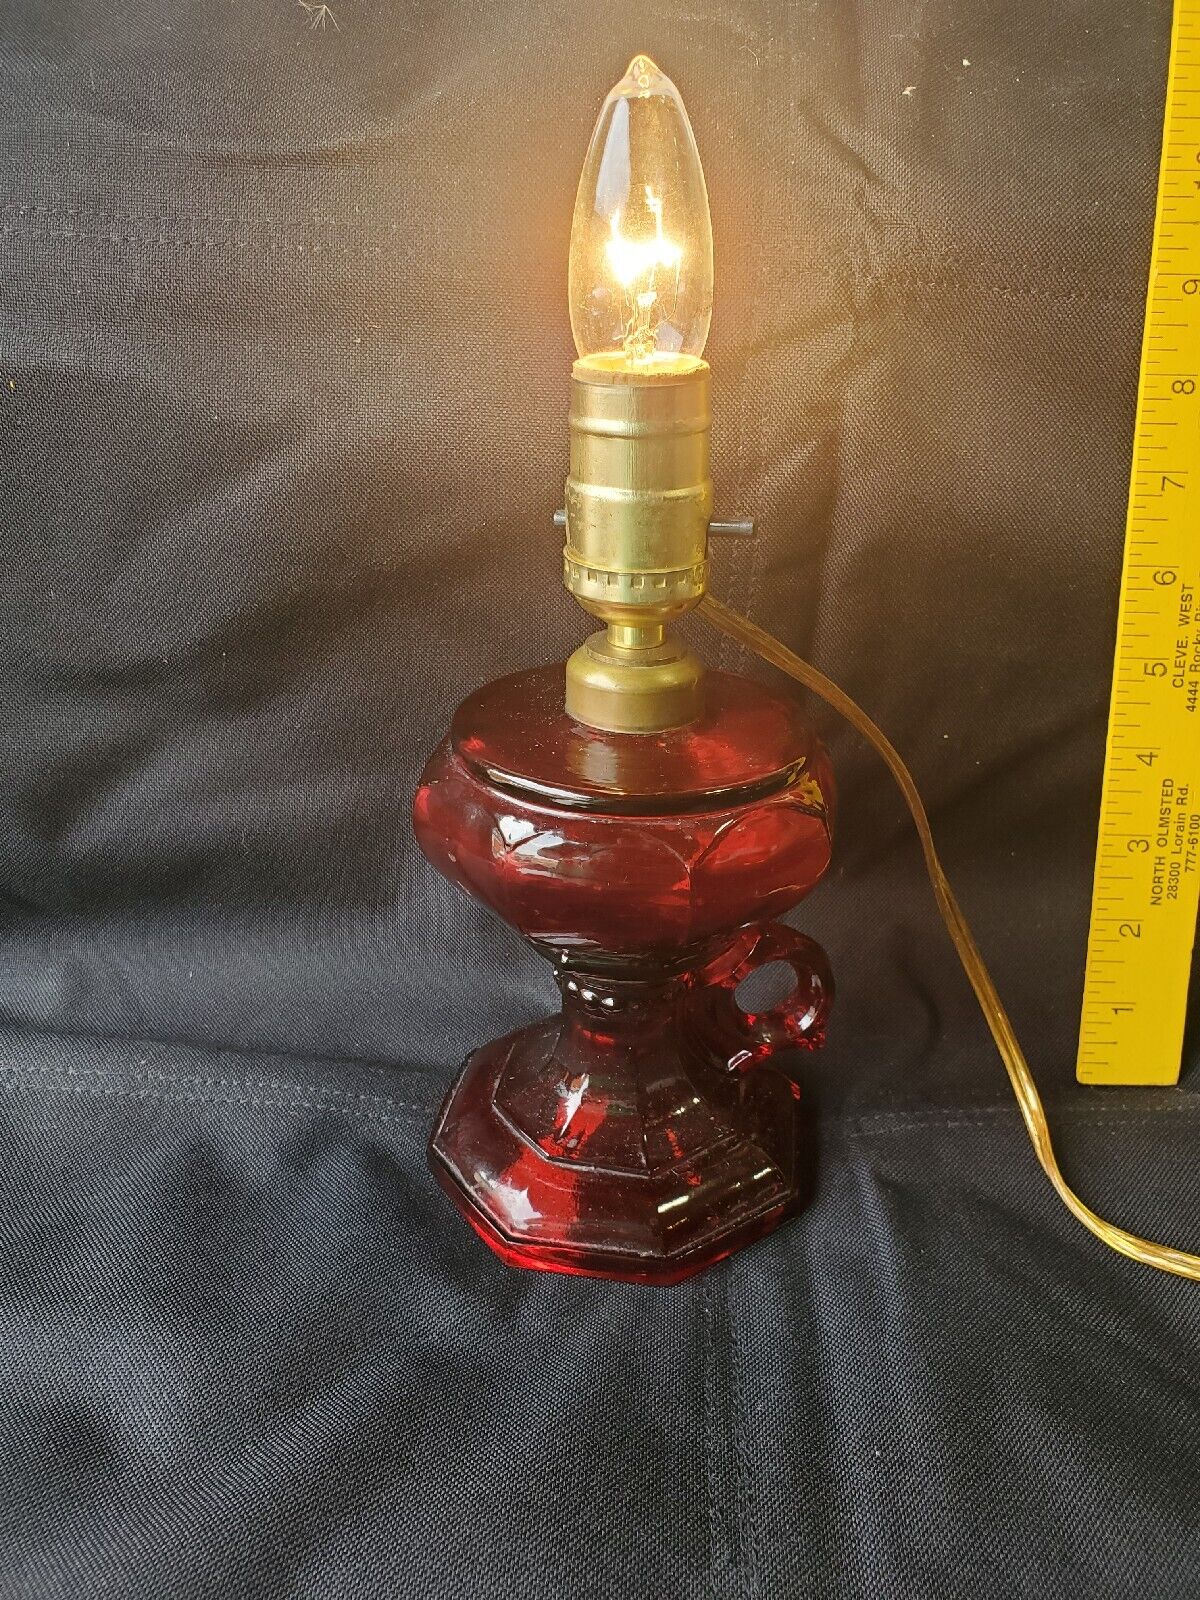 Vintage Fenton Art Glass Converted Oil Lamp Works Flawless Shape